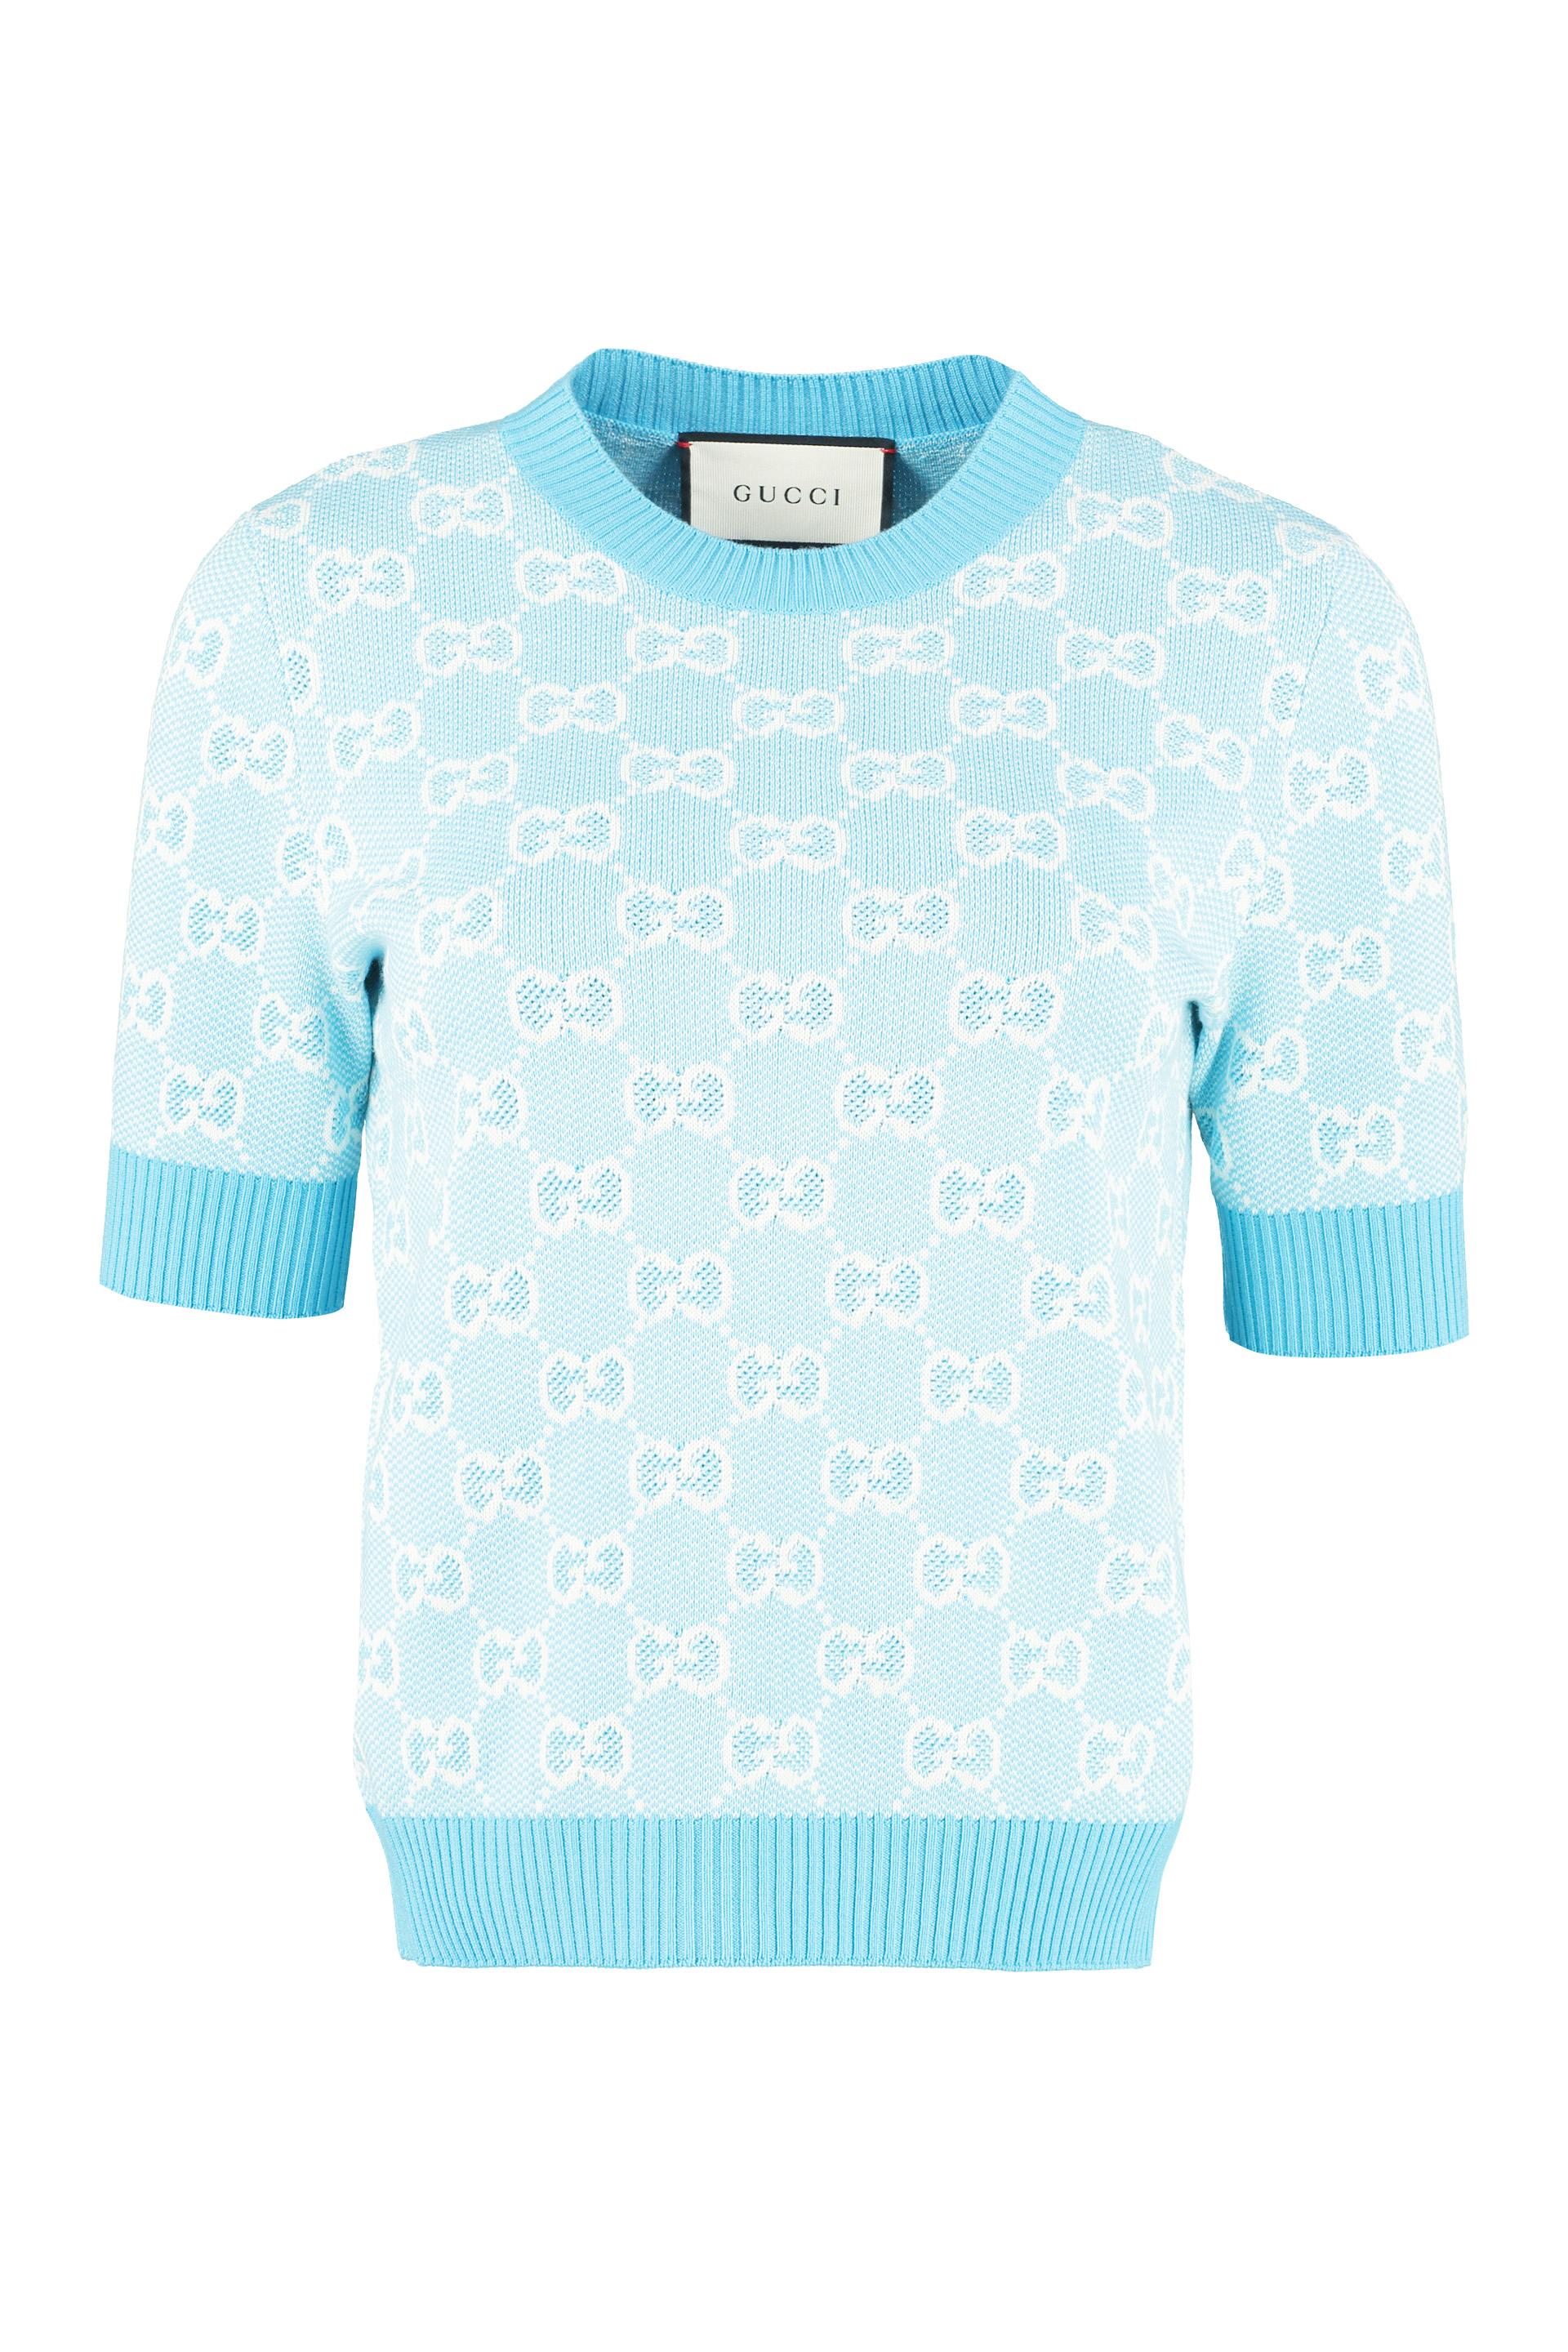 Gucci Wool Jacquard Knit Top in Blue | Lyst